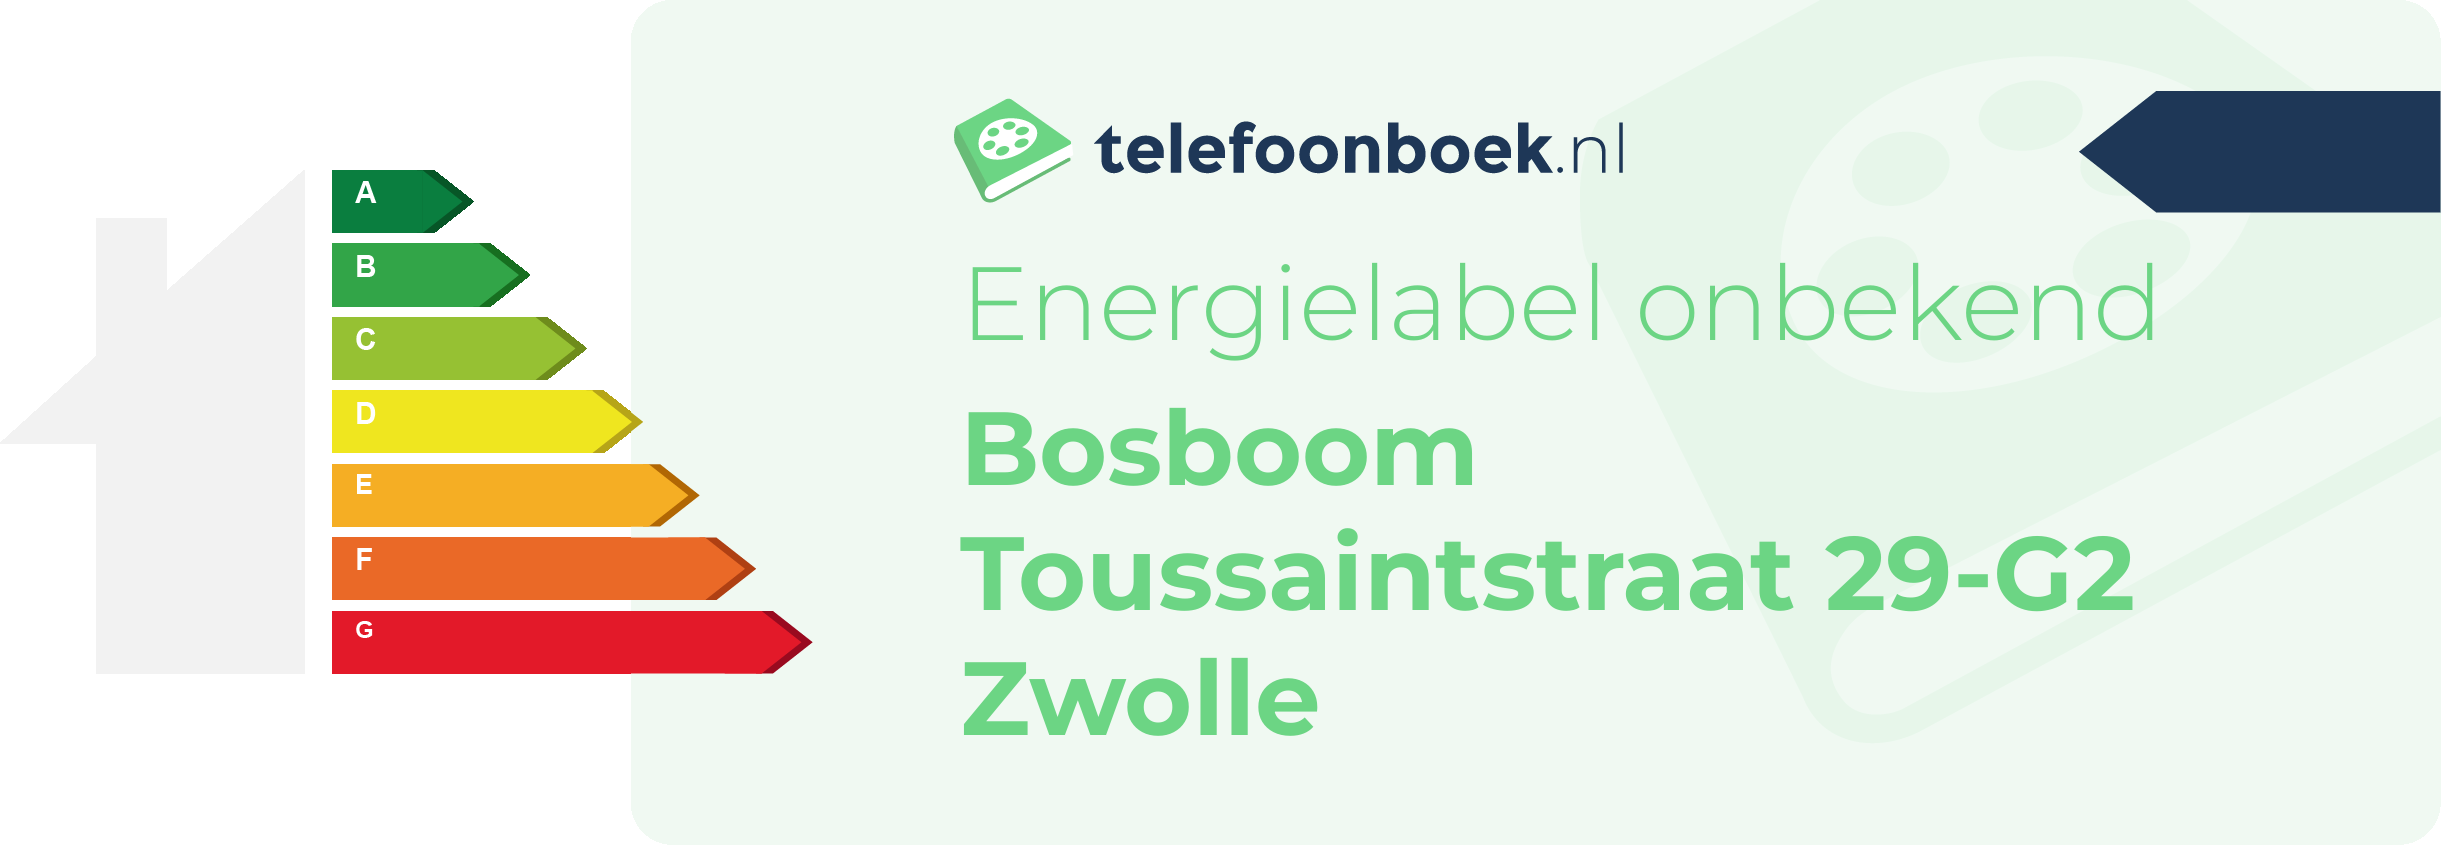 Energielabel Bosboom Toussaintstraat 29-G2 Zwolle